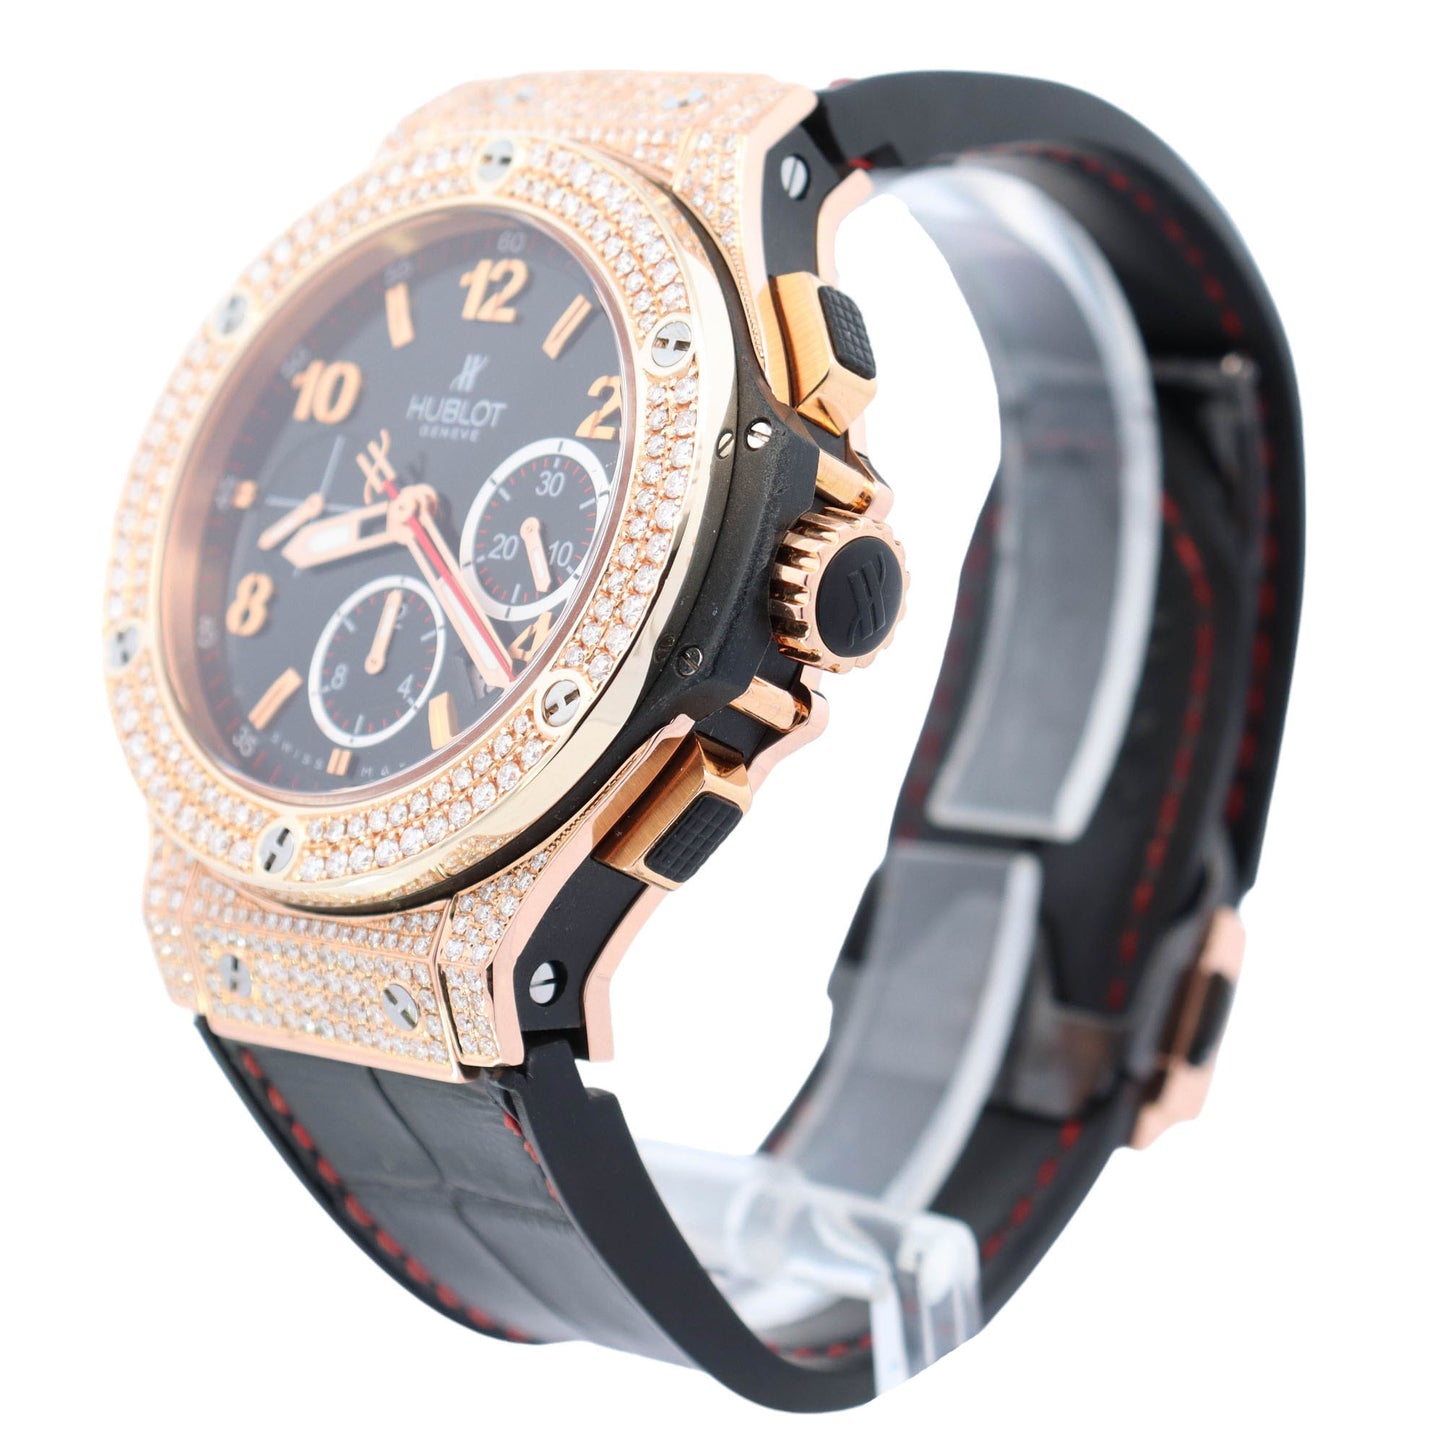 Hublot Big Bang 44mm Rose Gold Black Chronograph Dial Watch Reference# 301.PX.130.RX